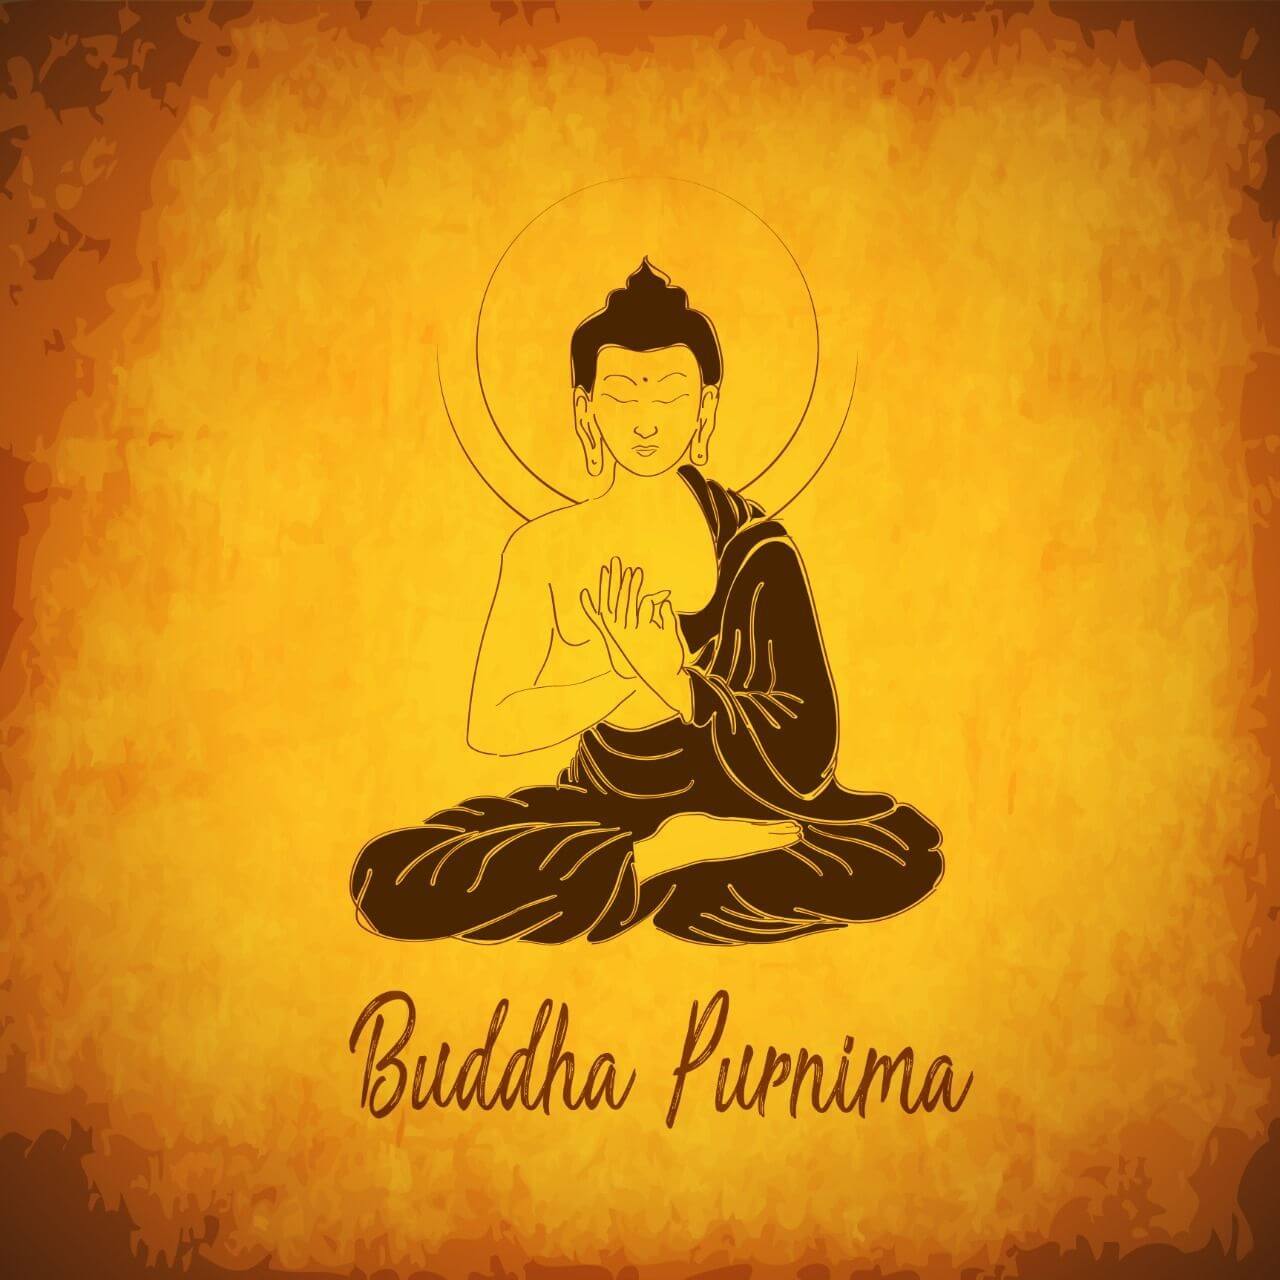 Phật học - Đạo Phật